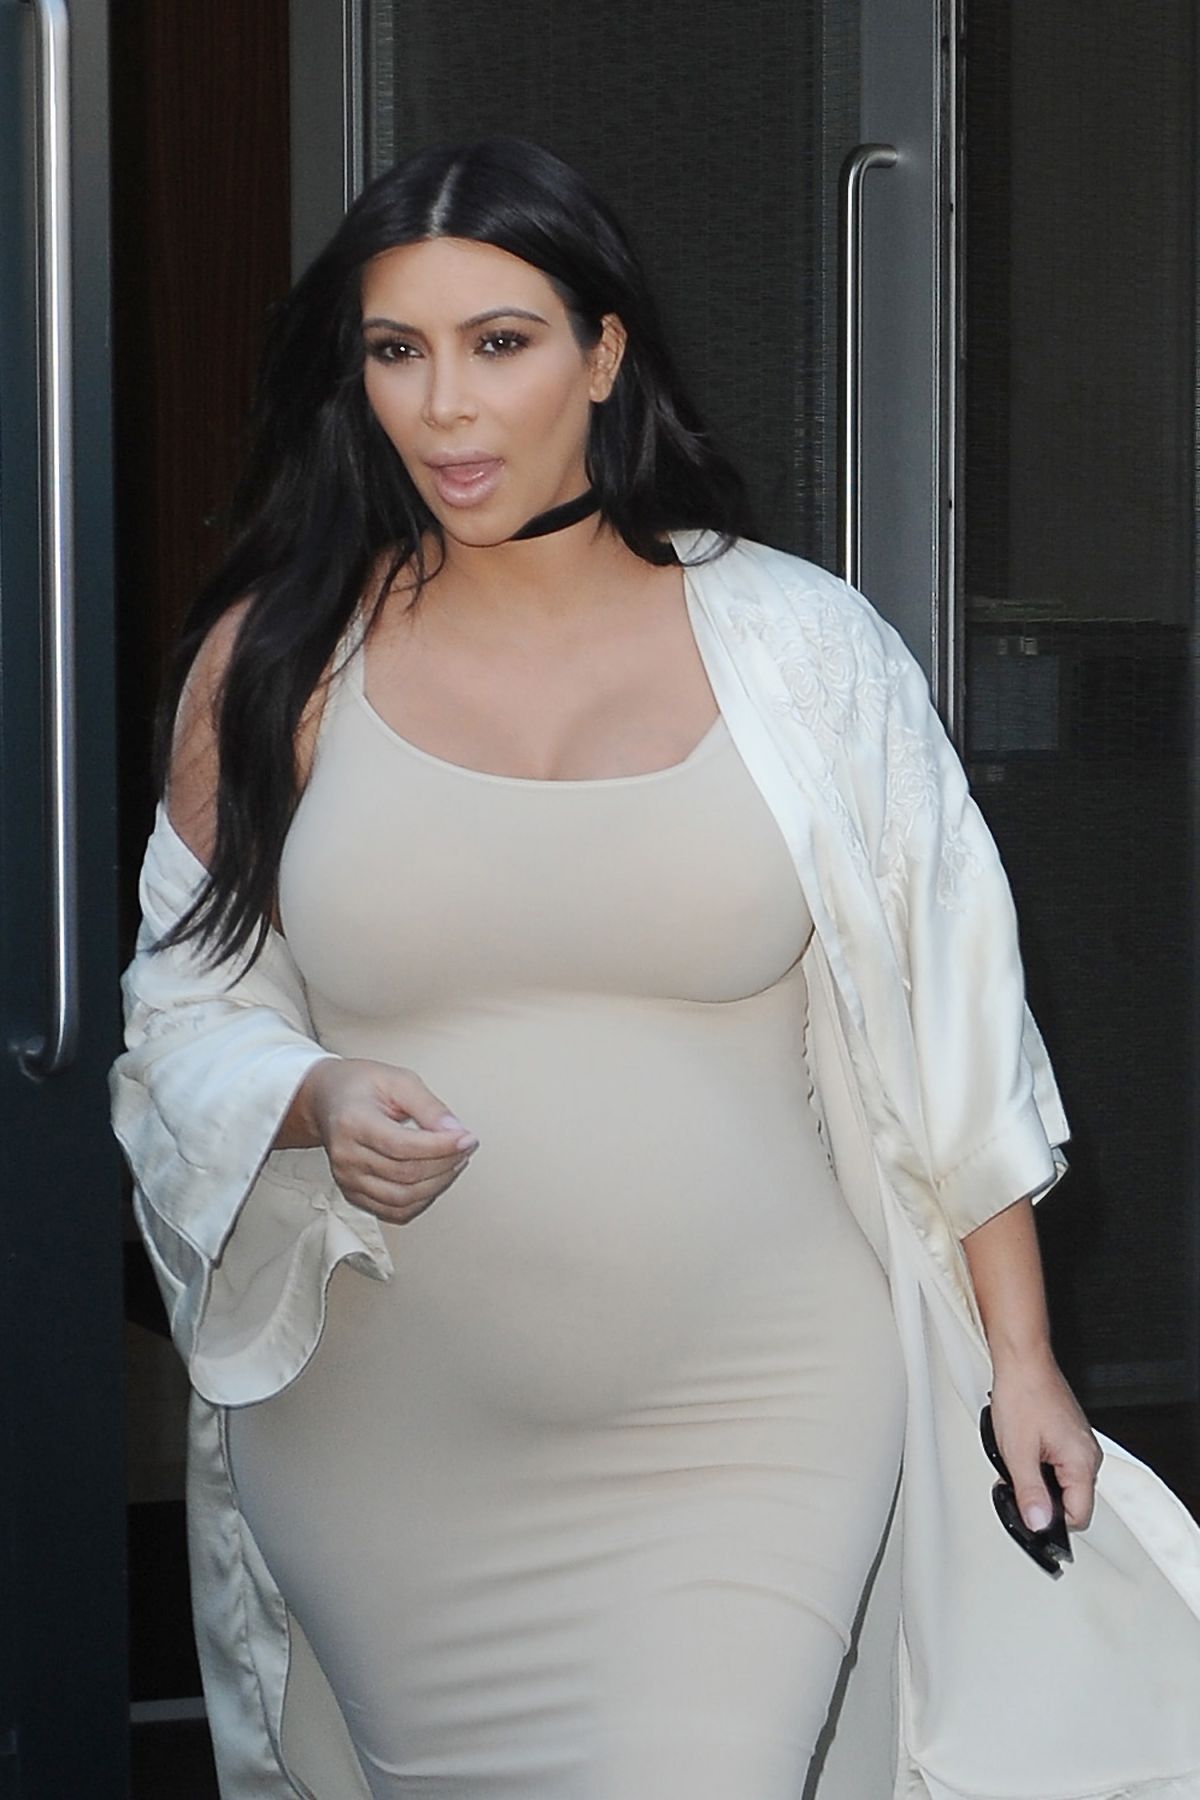 Pregnant Kim Kardashian Leaves Her Apartment In New York 09 13 2015 4 